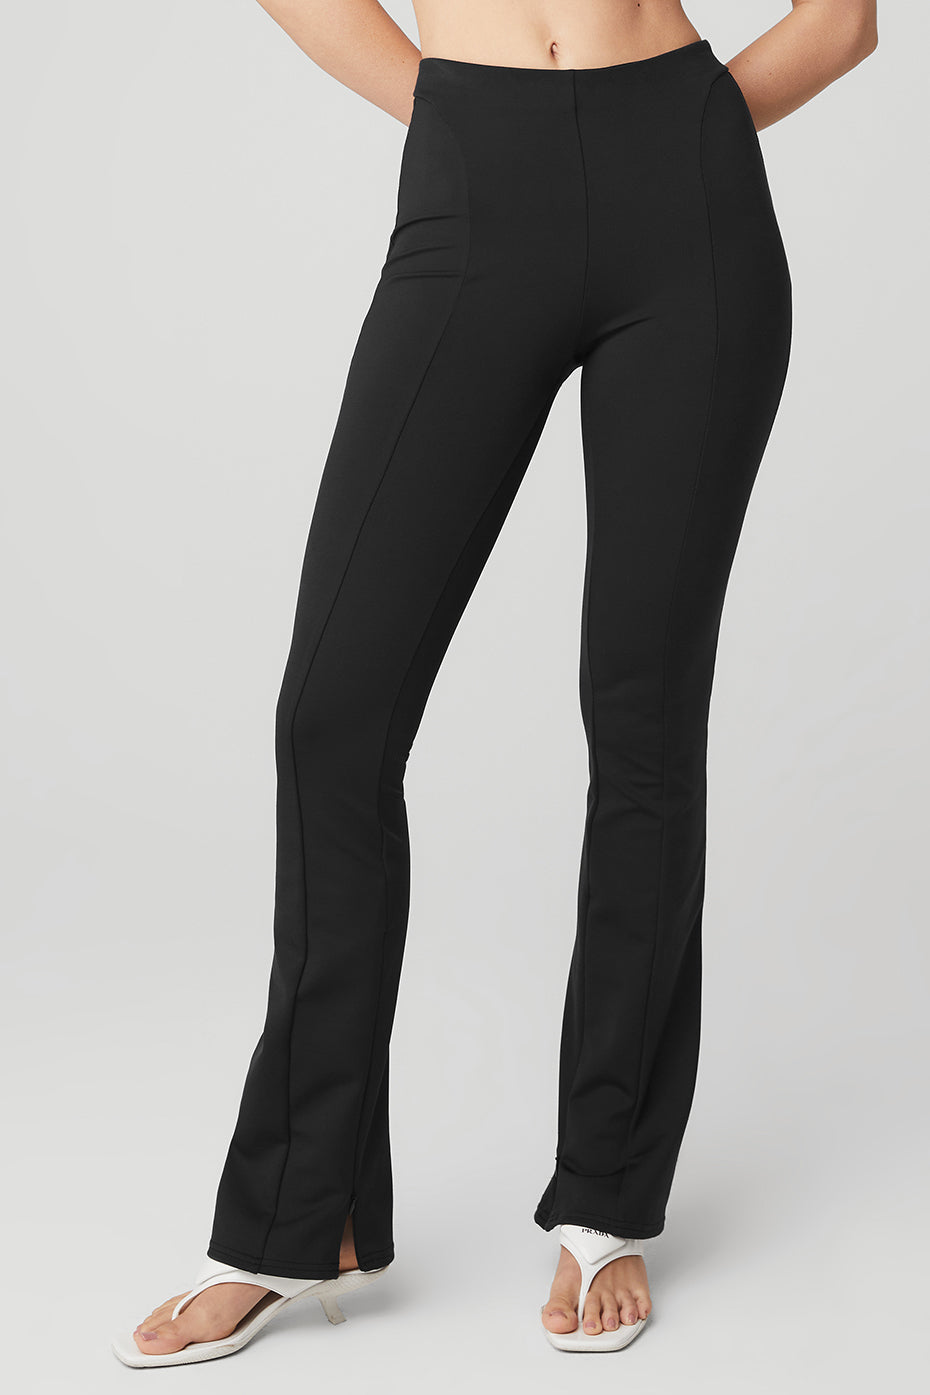 ALO Yoga Women's Large Size Zipper Black Sweatpants